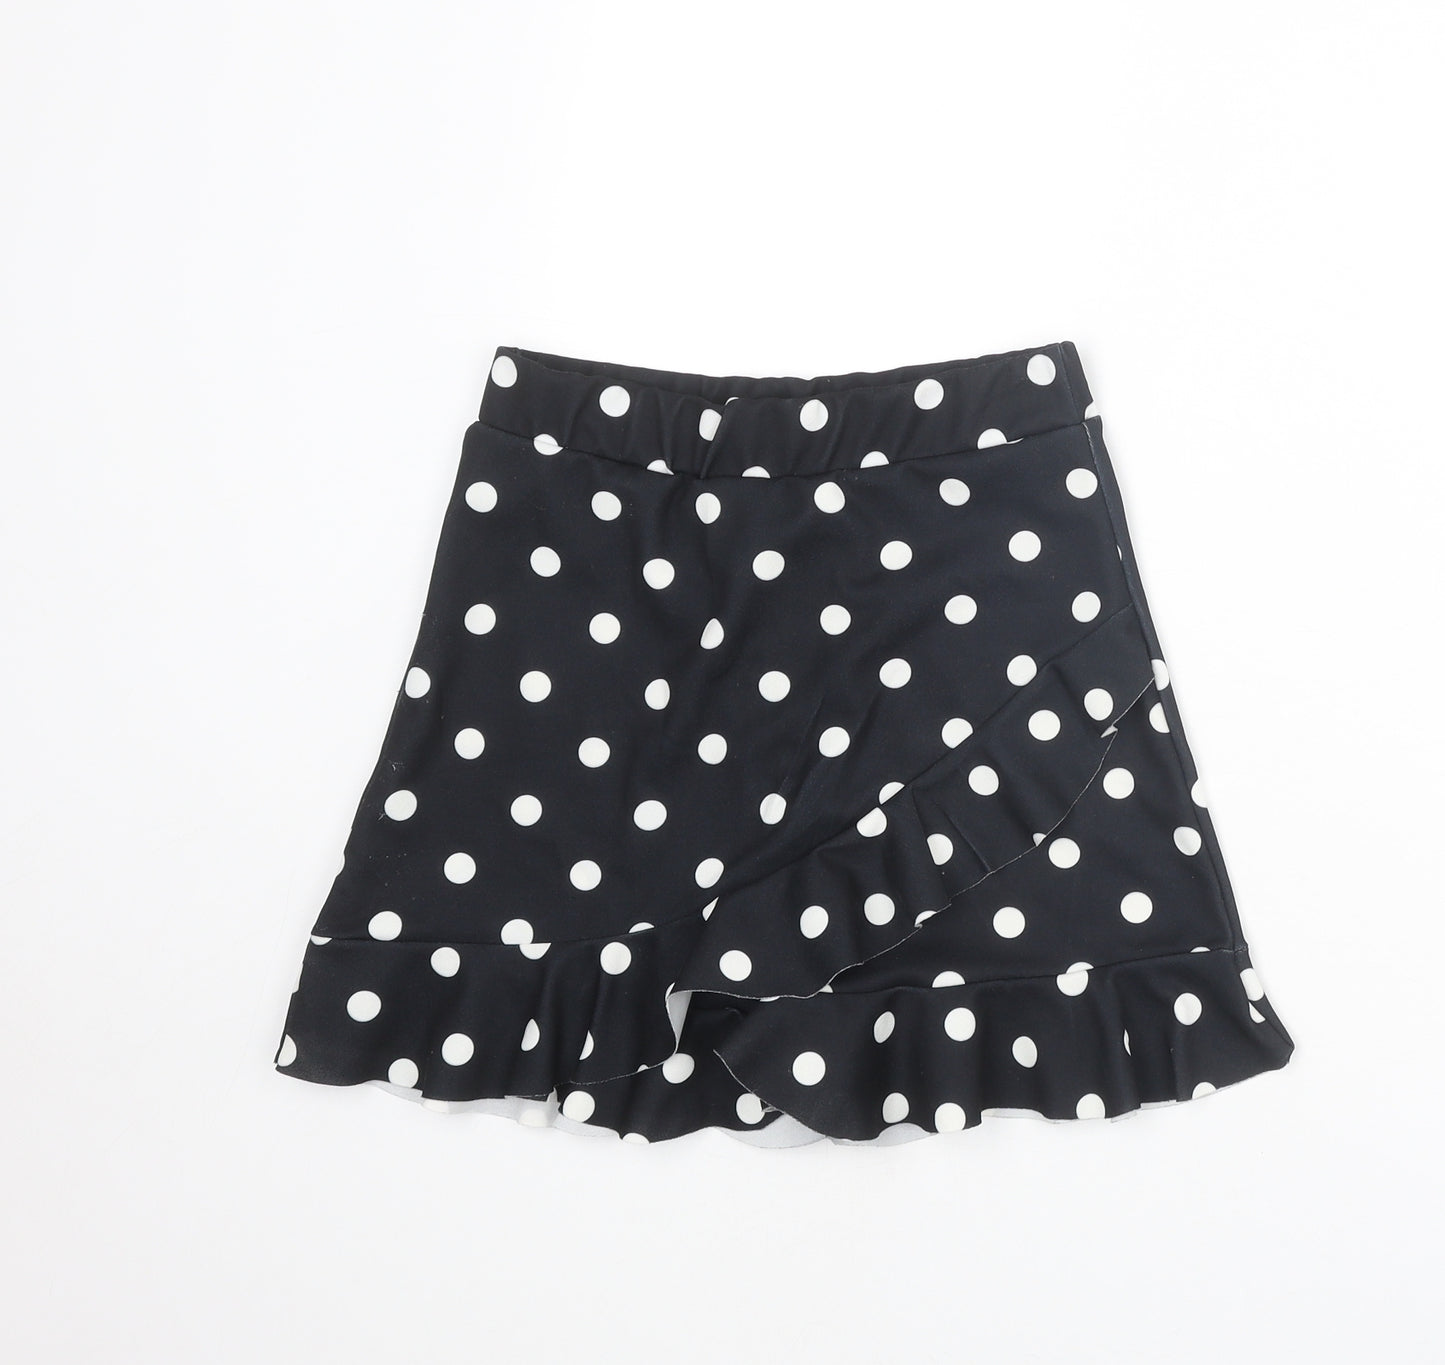 New Look Womens Black Polka Dot Polyester Basic Shorts Size 8 L3 in Regular Pull On - Skort